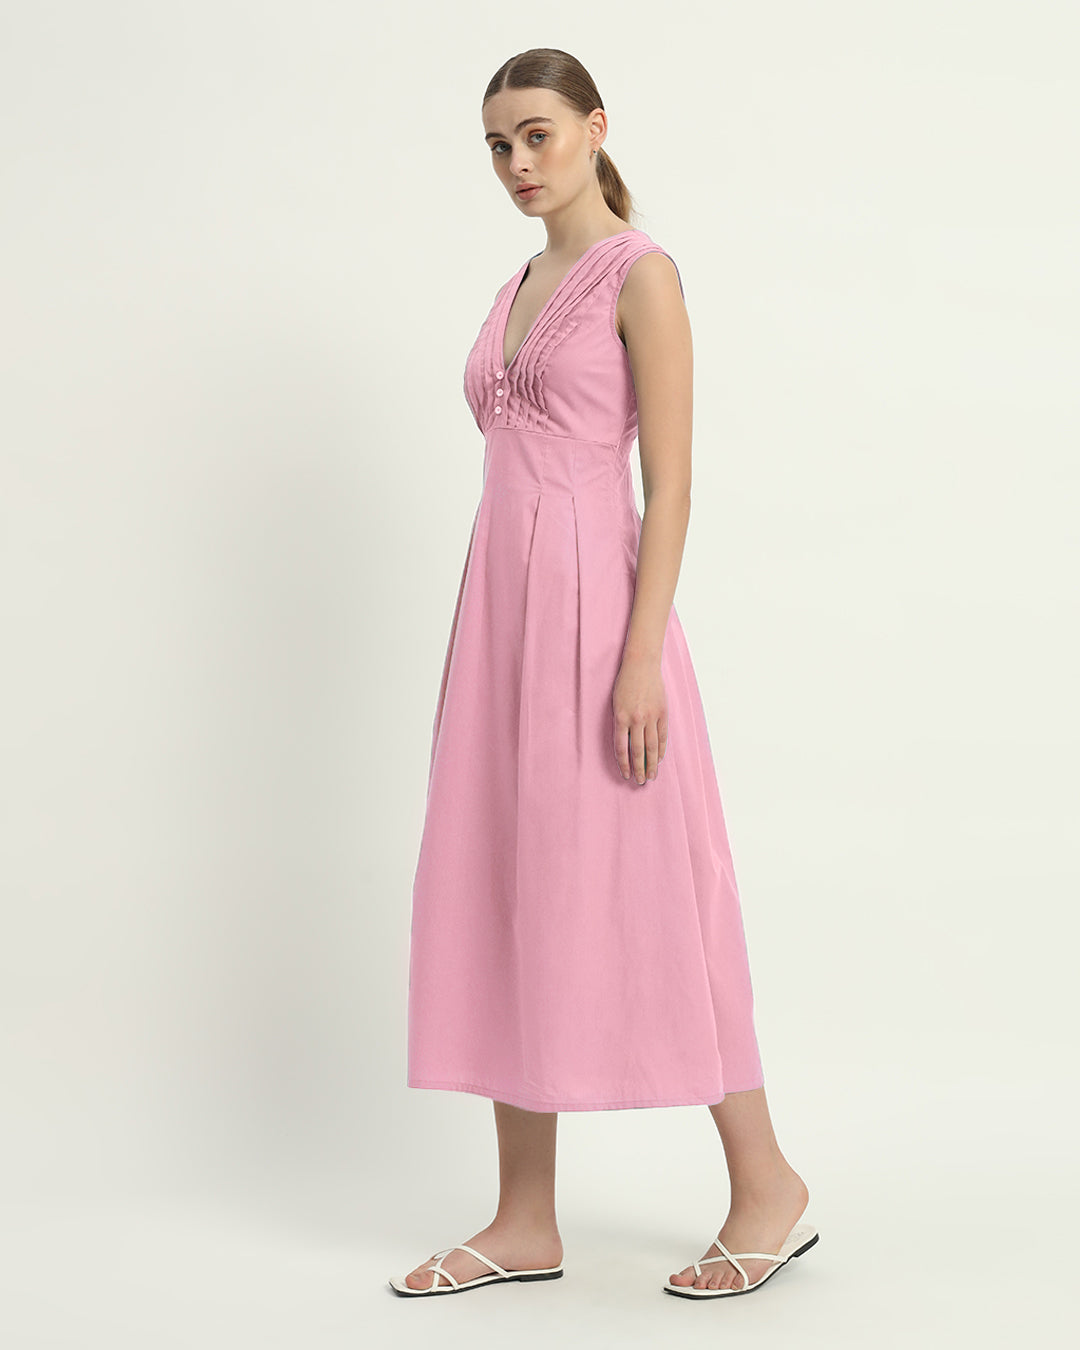 The Fondant Pink Mendoza Cotton Dress